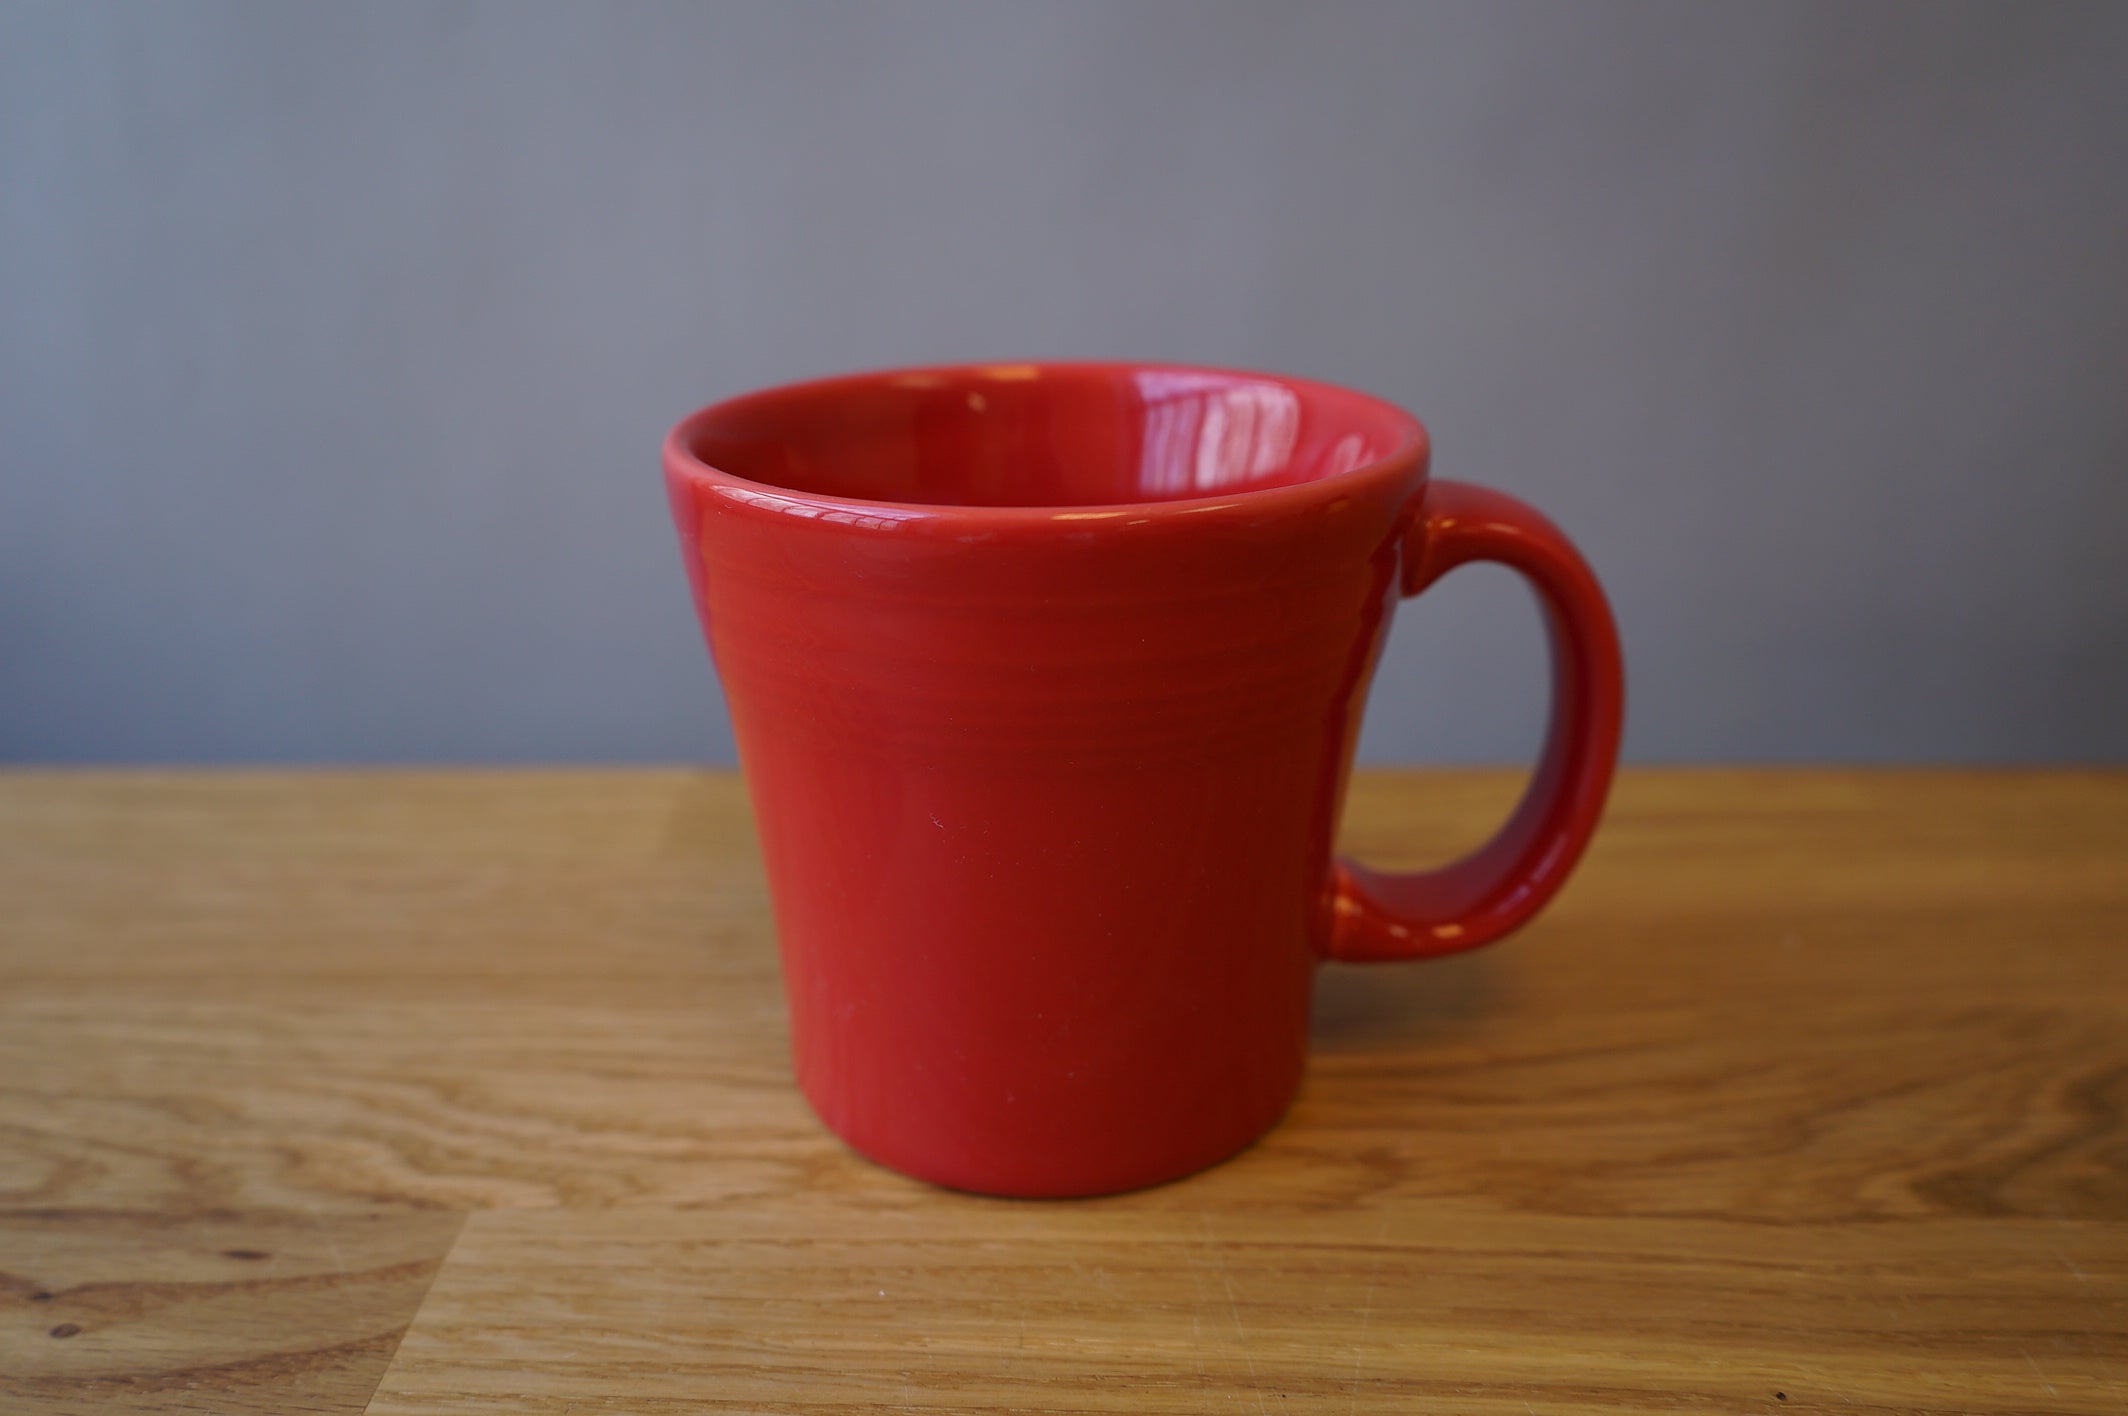 Red Mug